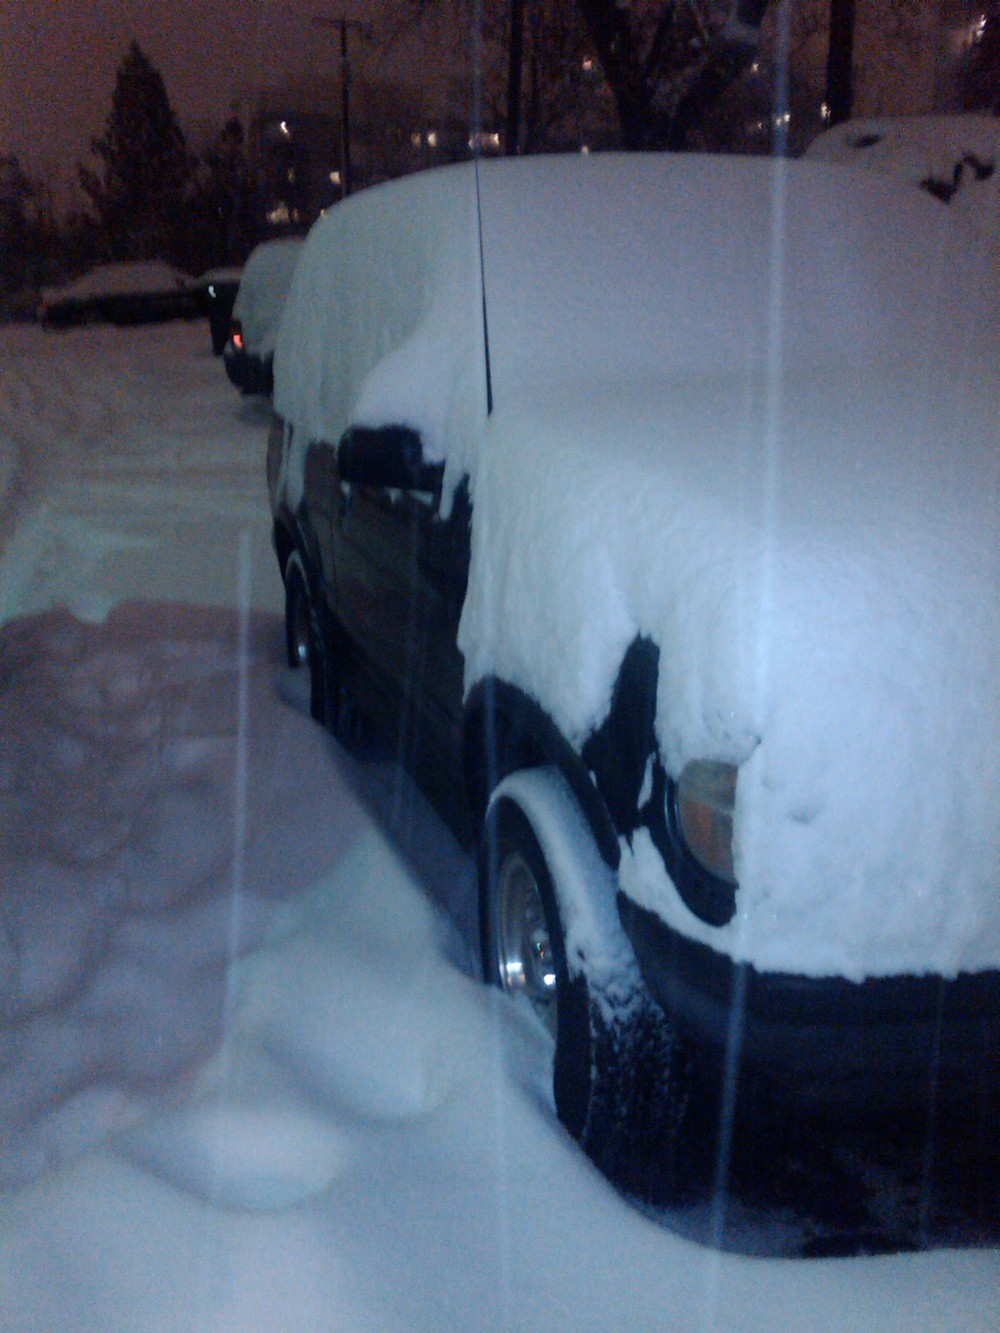  My Snow Covered Car 